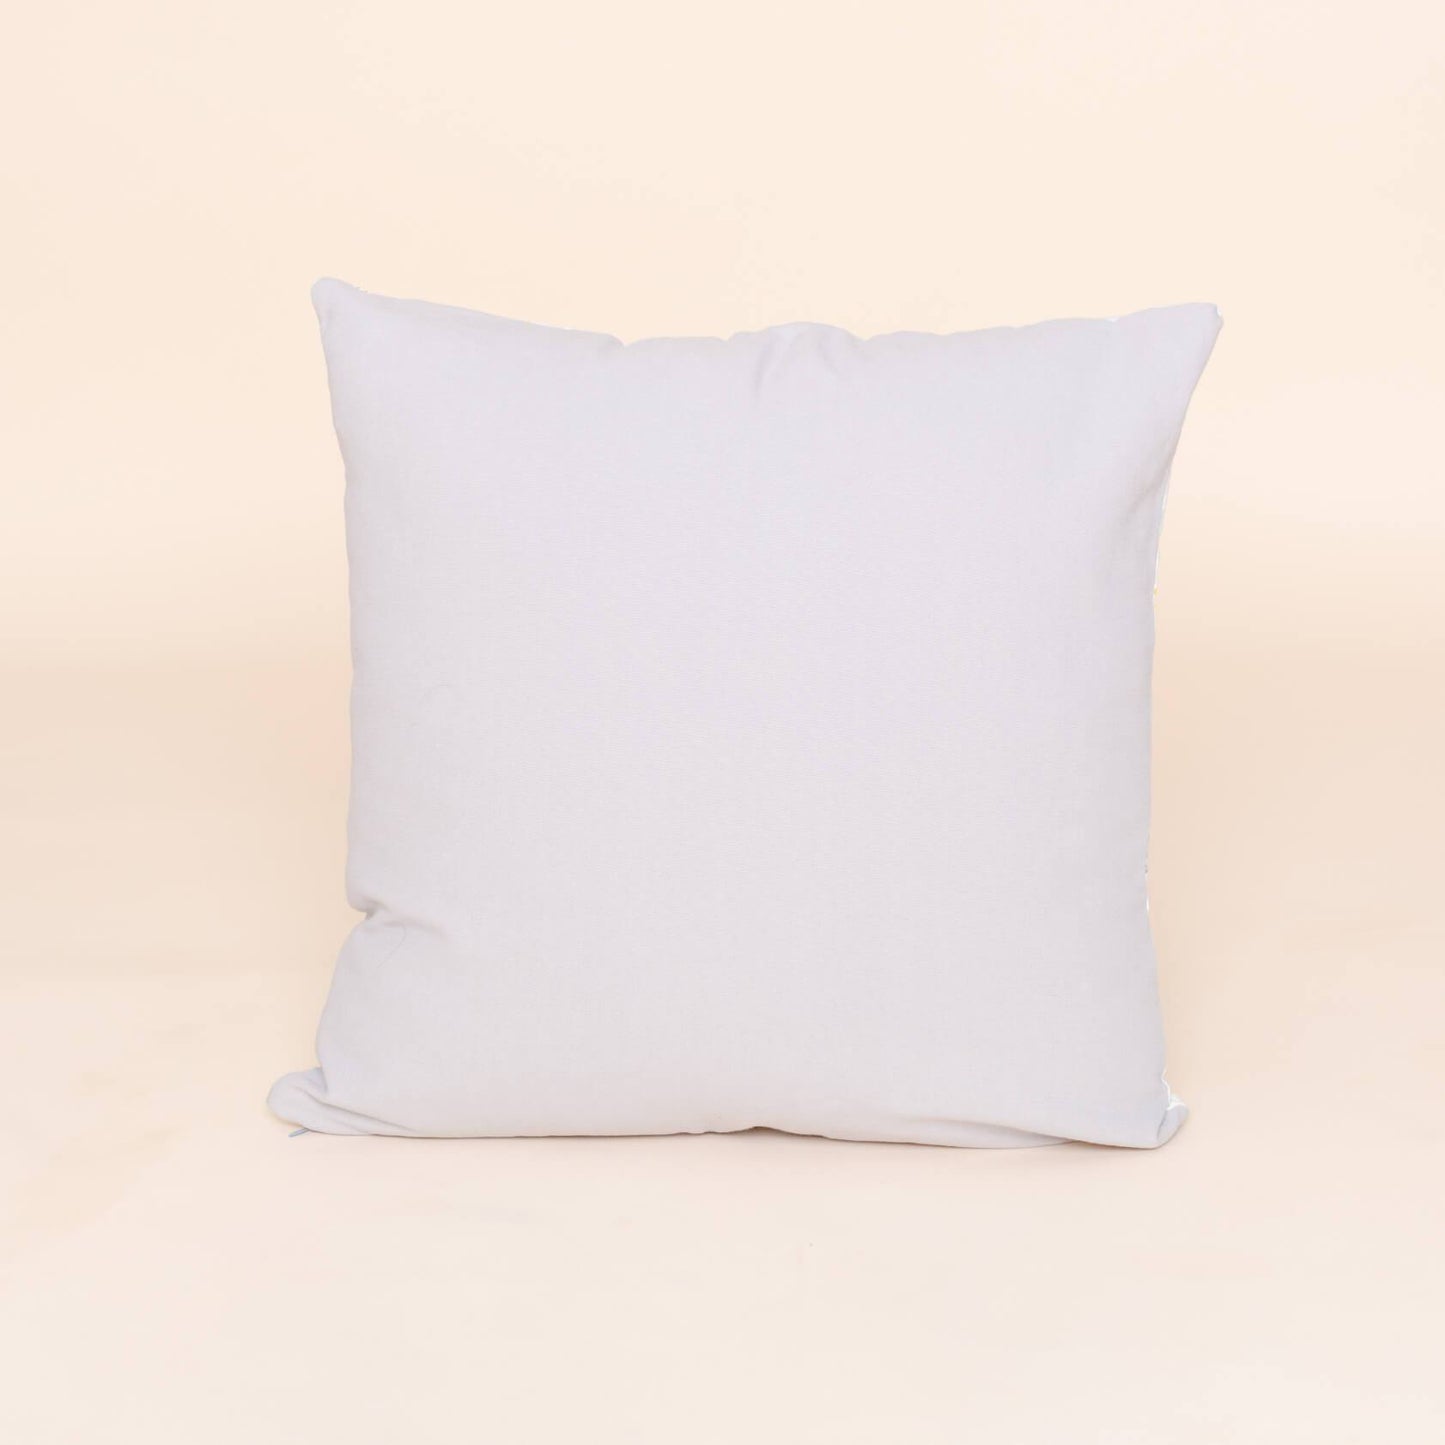 Fryett’s Bergen Grey 20x20” Cushion Cover